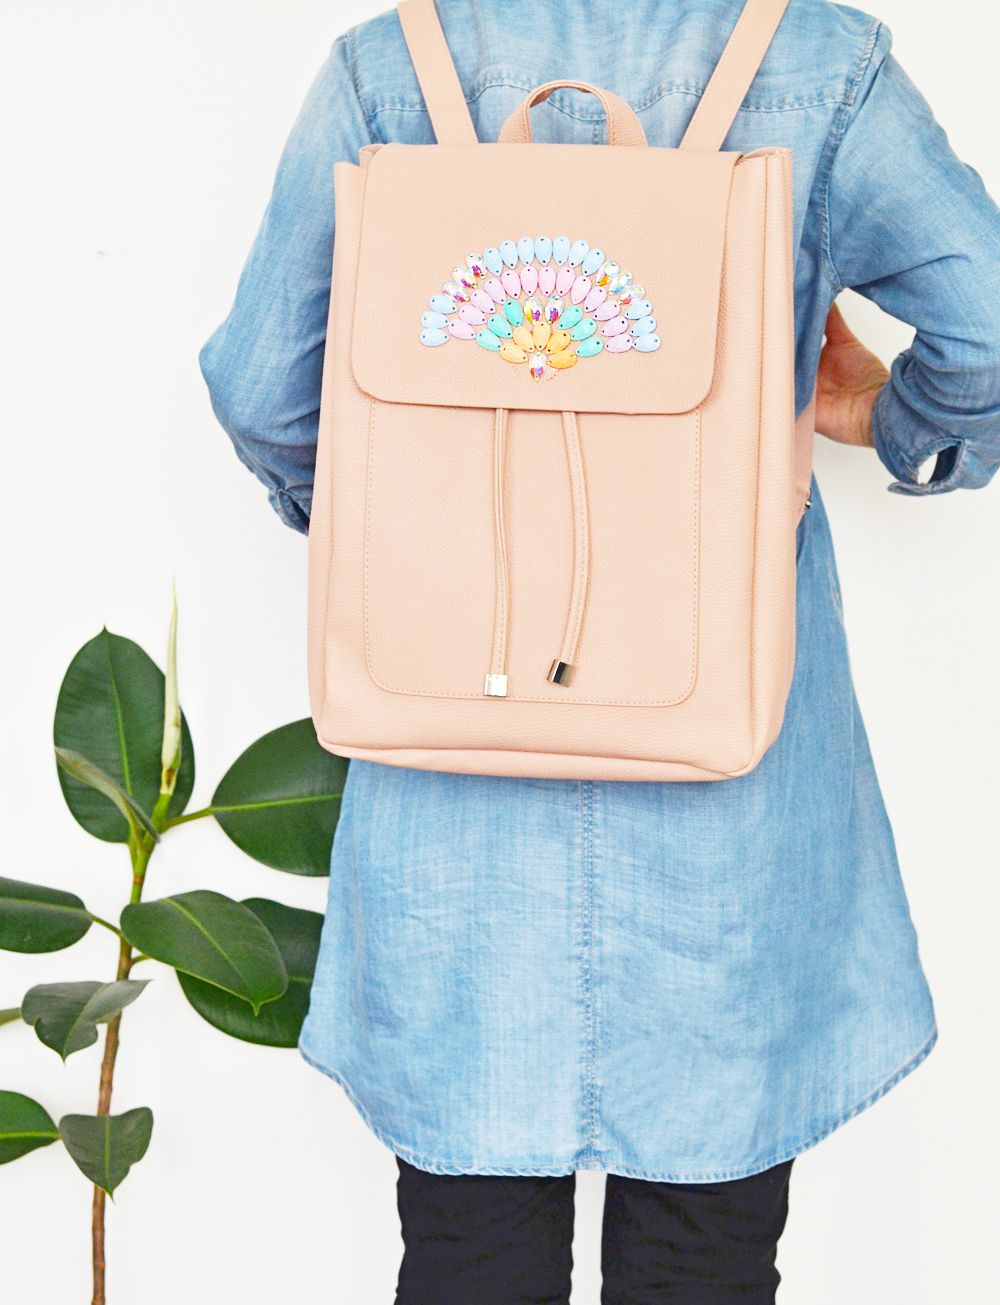 Diy pastel gemstone backpack project